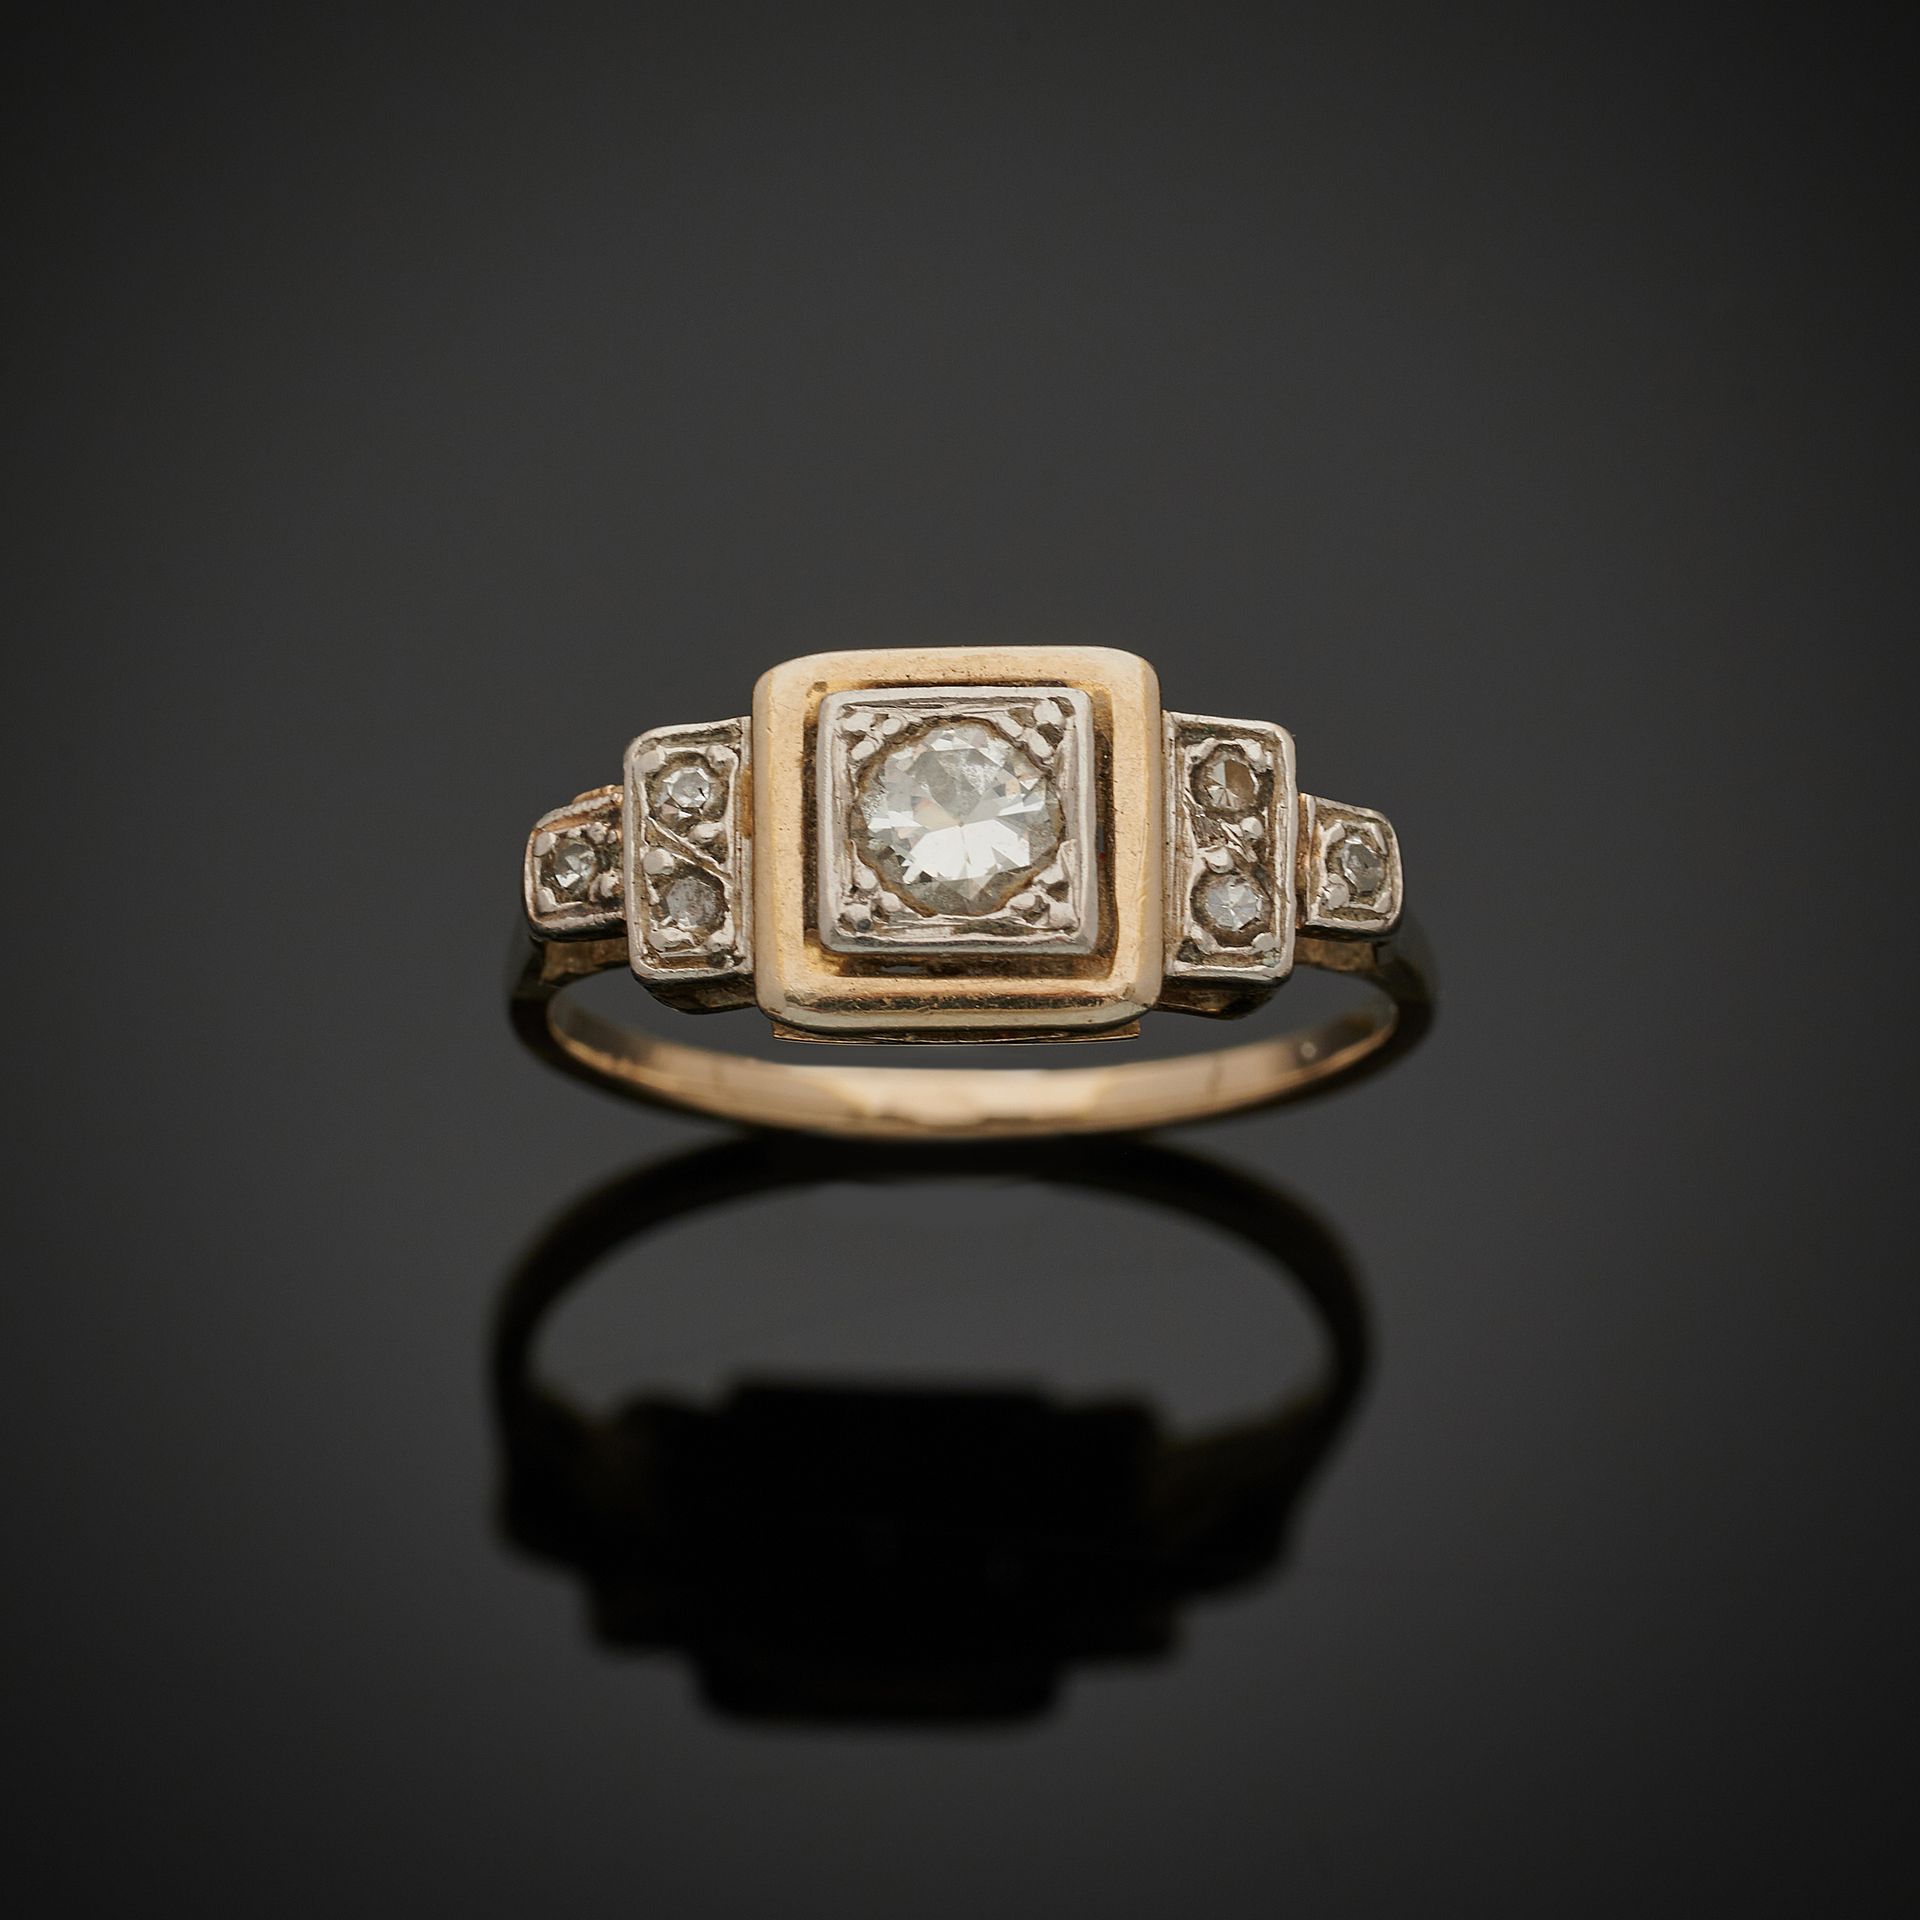 Null 750毫米白金装饰艺术戒指，方形图案上镶嵌一颗明亮式切割钻石，梯形肩部镶嵌八分之一的钻石。约1930年，法国作品。
TDD : 52
毛重：2.6克